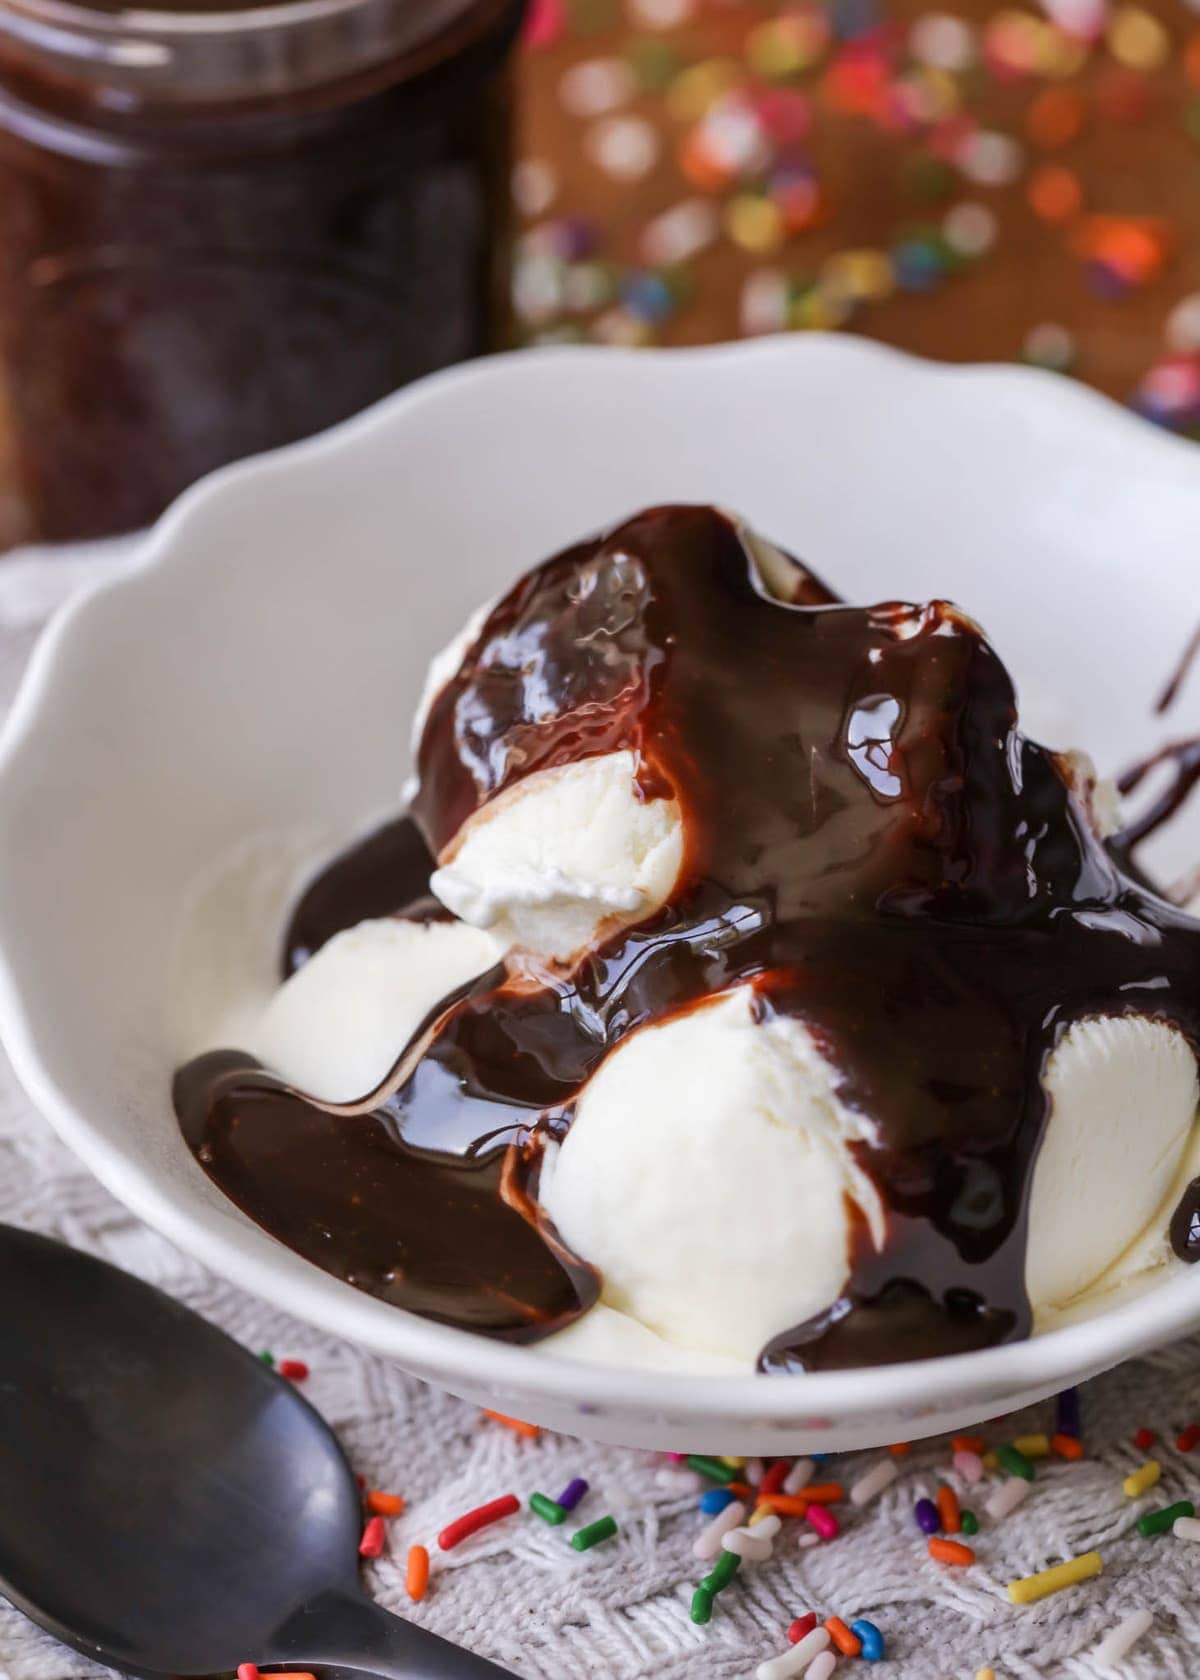 Homemade chocolate syrup poured over vanilla ice cream